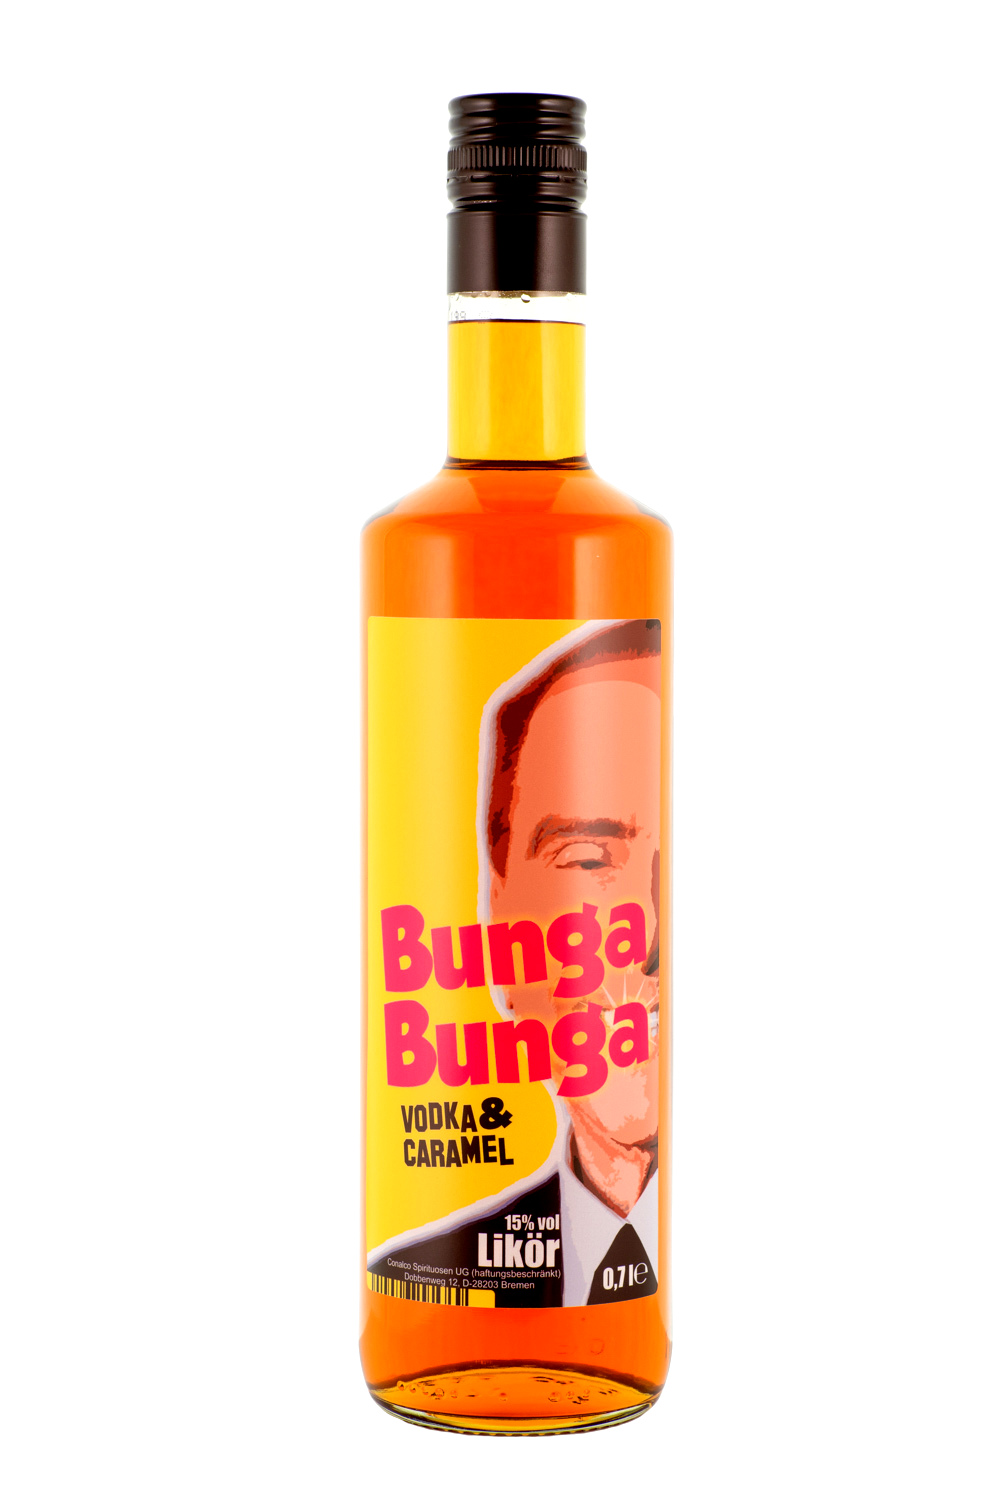 Vodka Caramel by Bunga Bunga